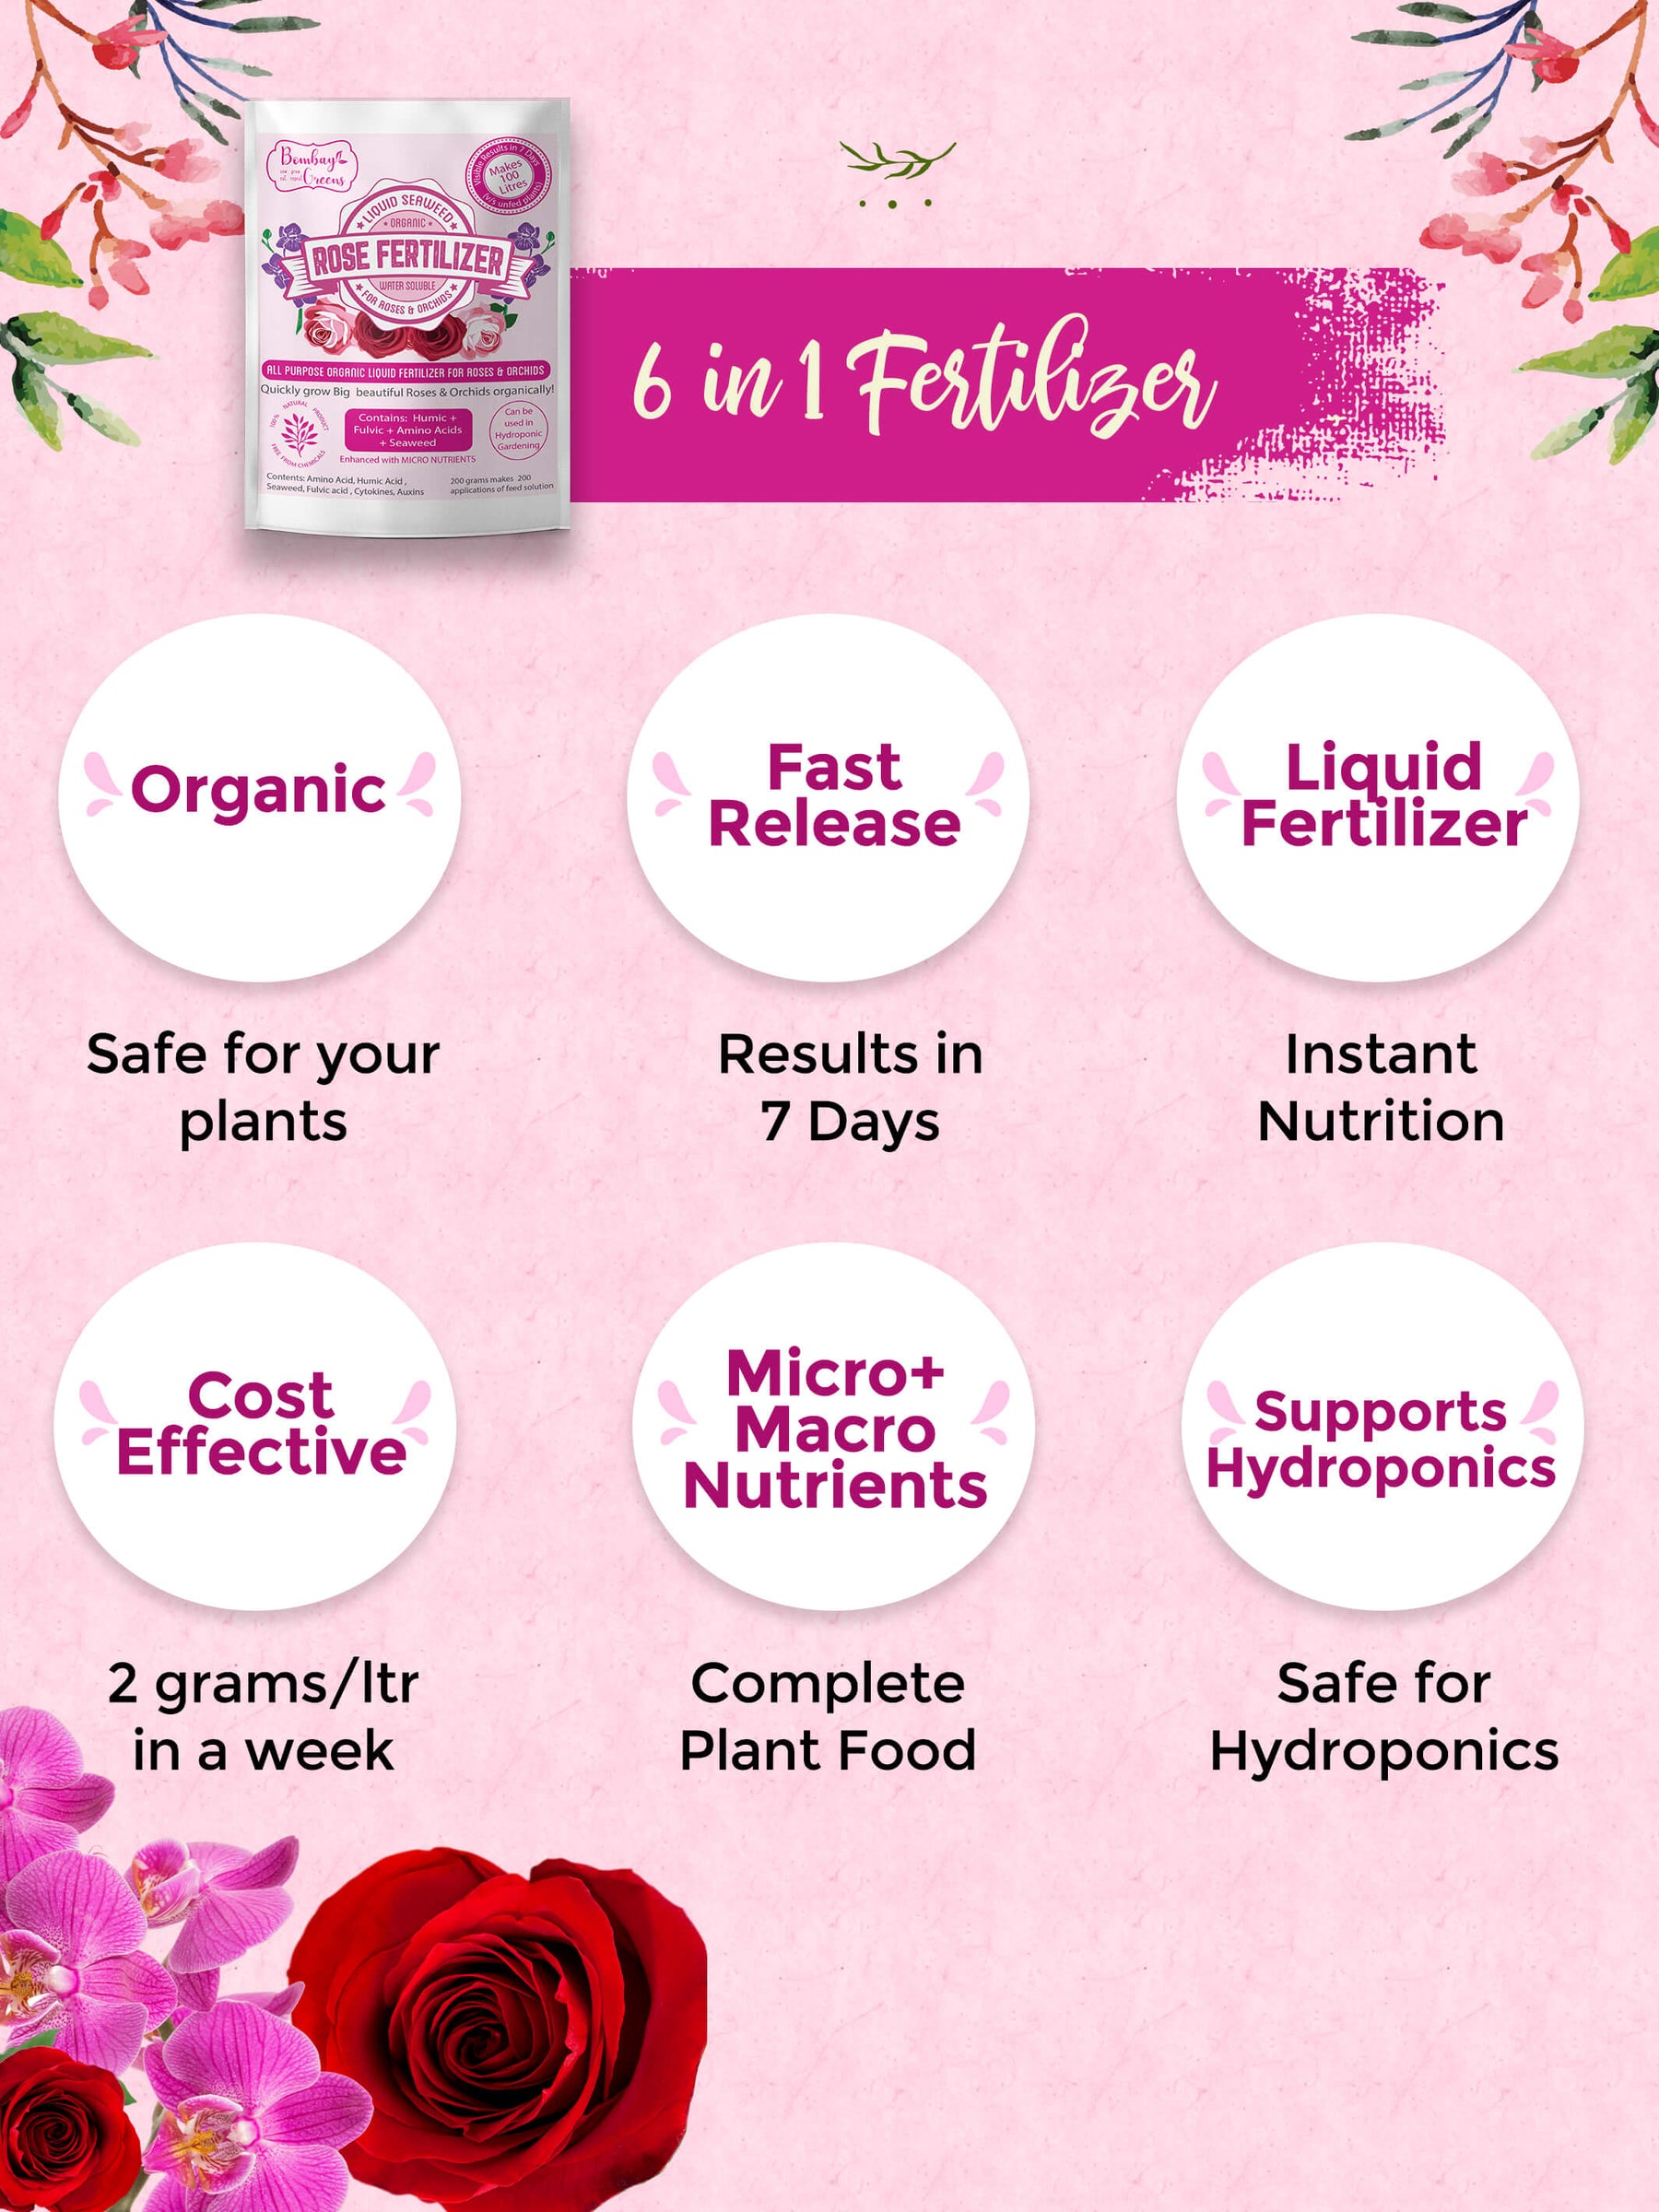 Liquid Fertiliser for Roses & Orchids - Features